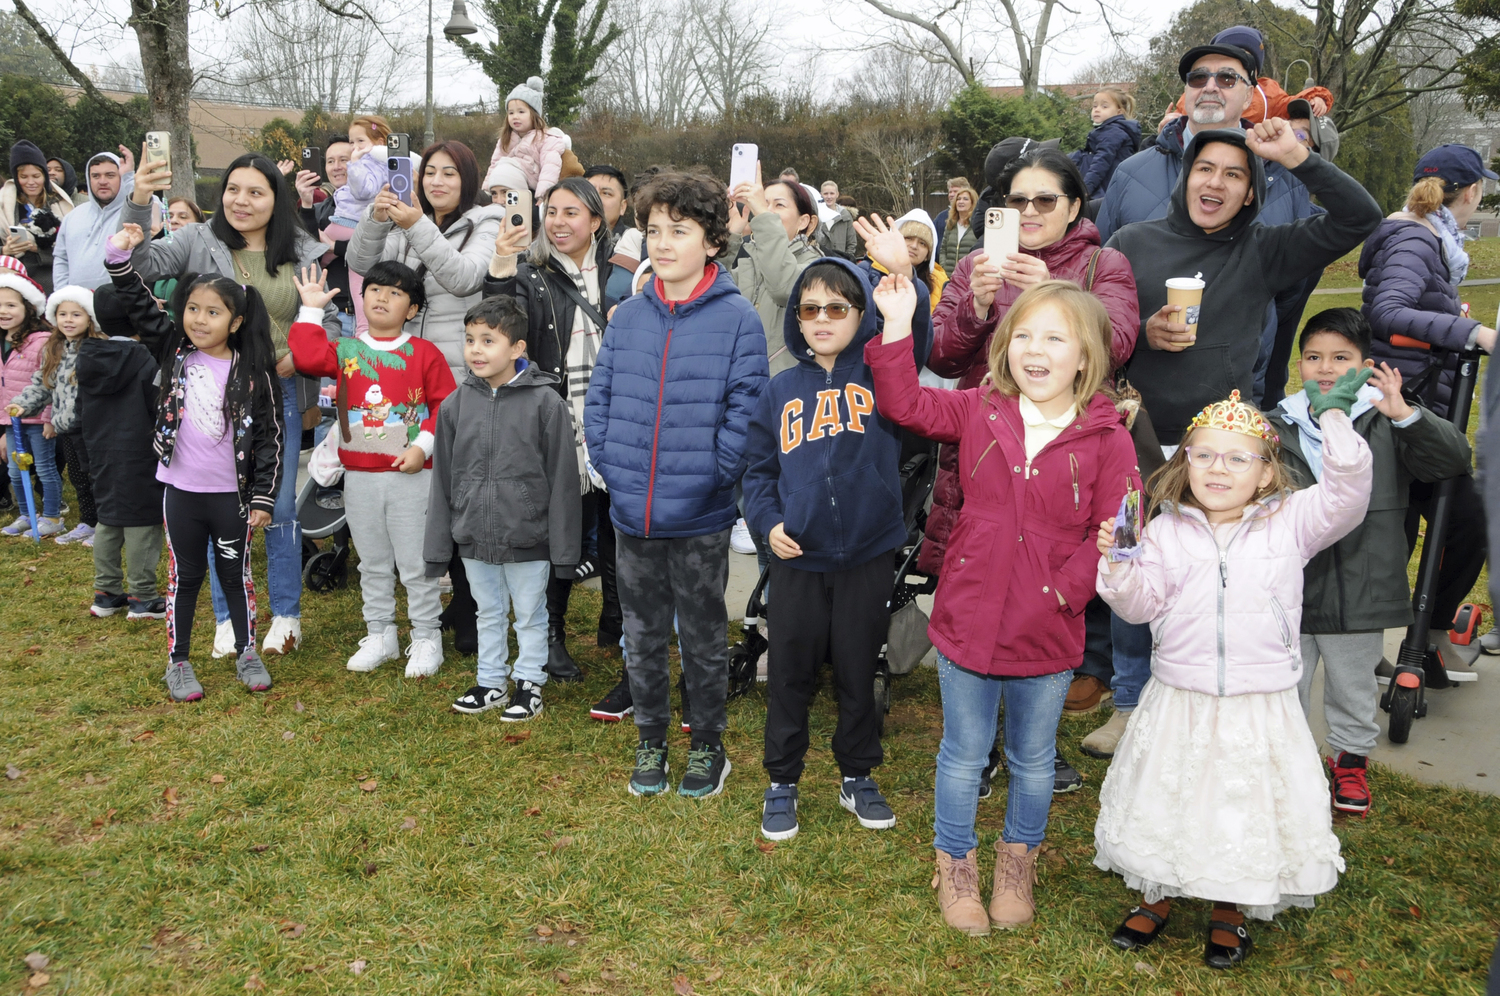 Children react to Santa's arrival in Herrick Park in East Hampton on Saturday.   RICHARD LEWIN